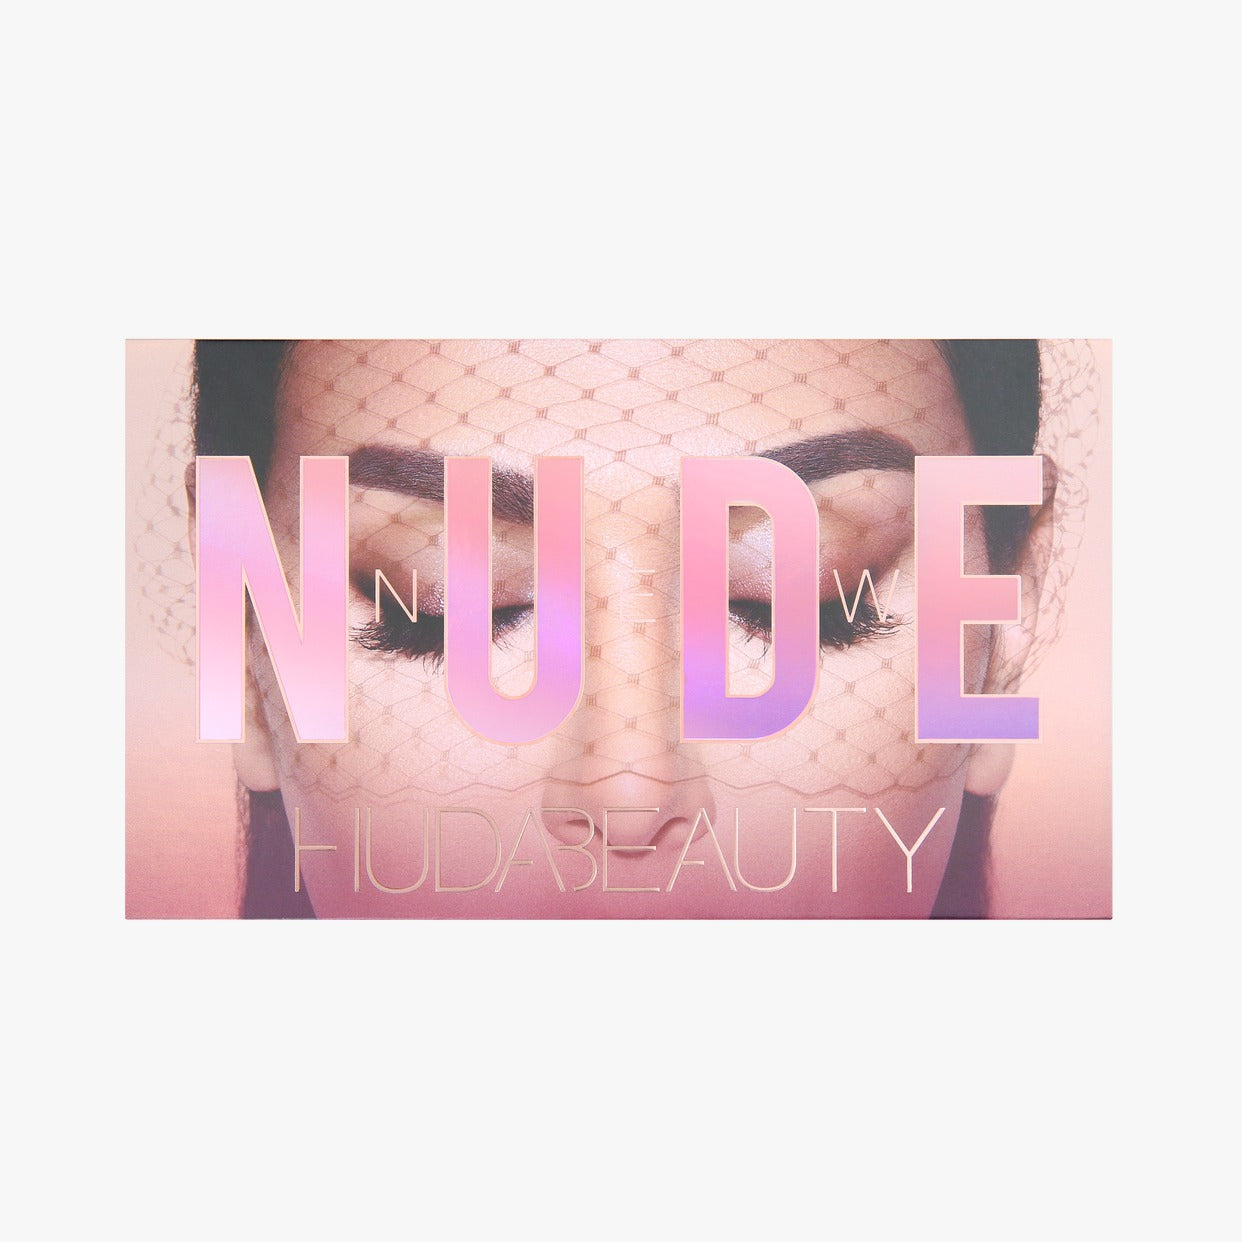 Huda Beauty - The New Nude Eyeshadow Palette